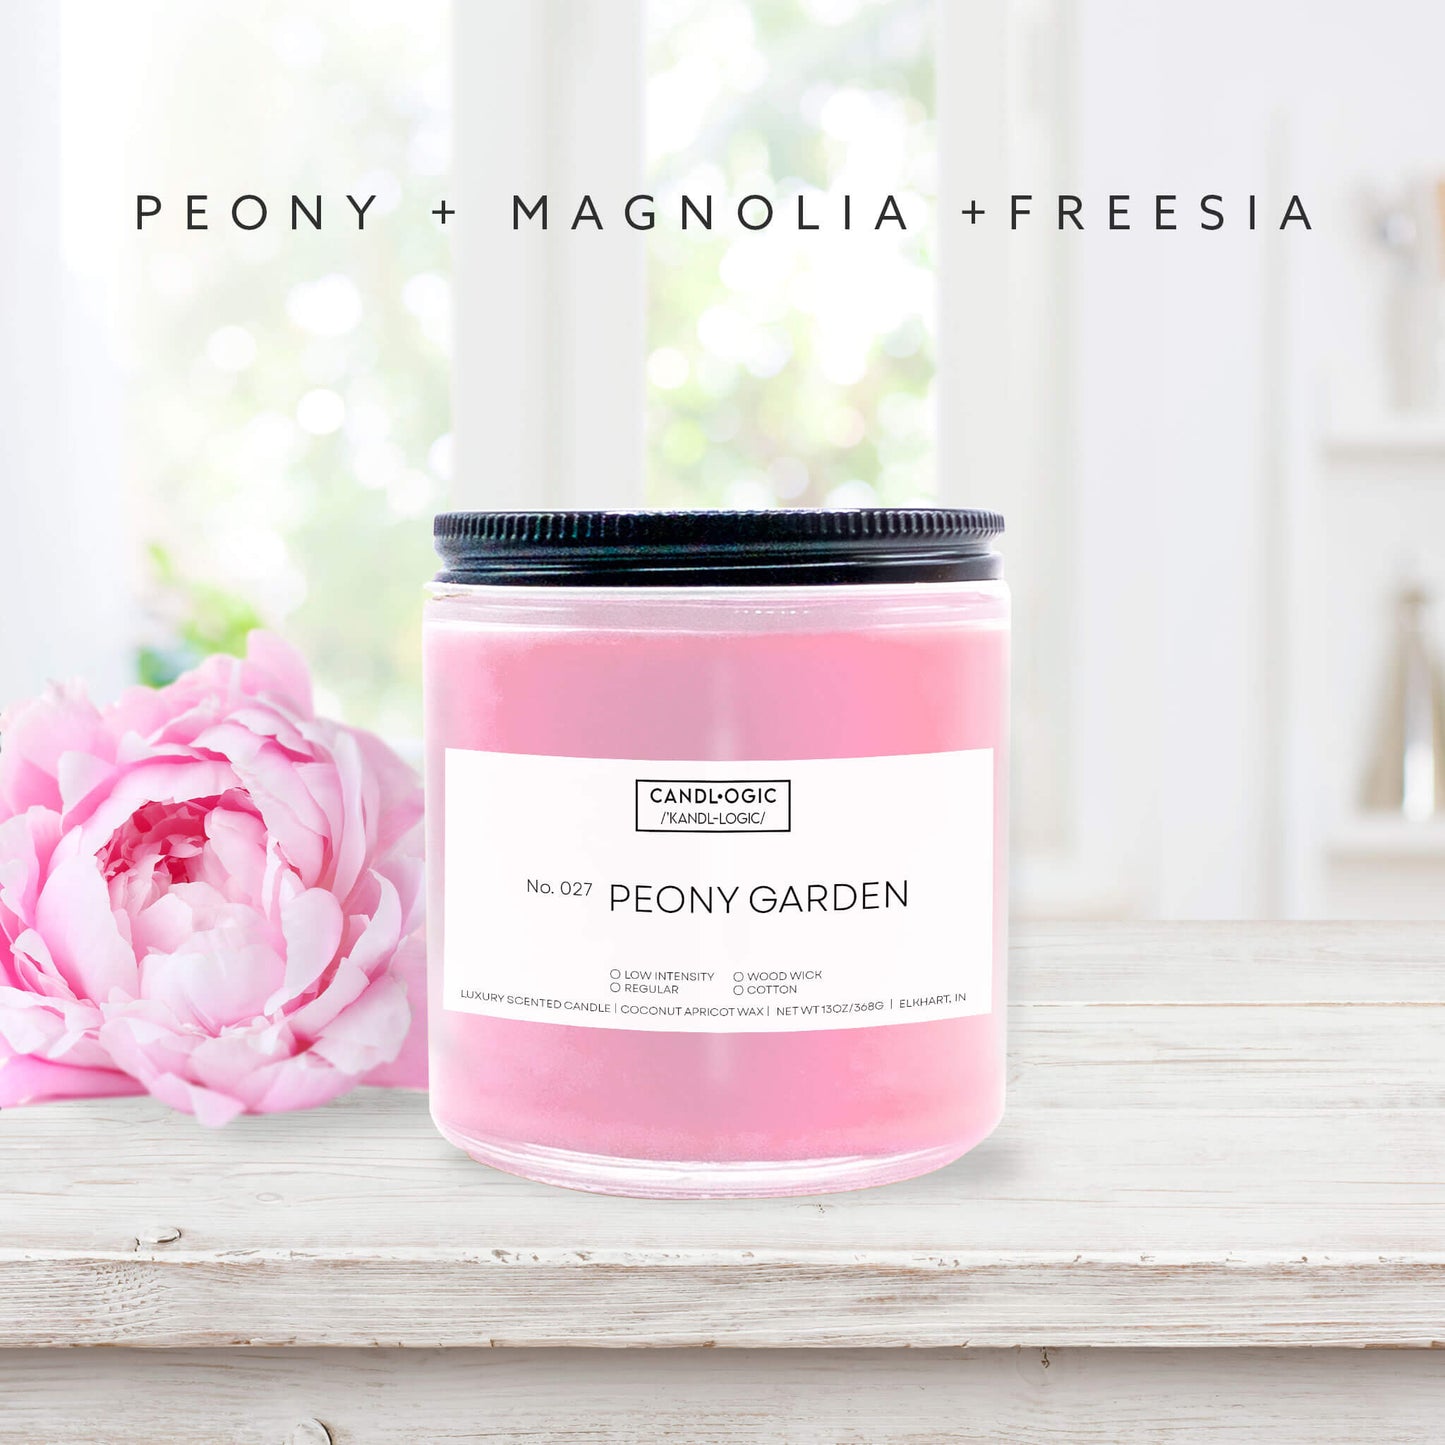 No. 027 Peony Garden candle - Peony, Magnolia & Freesia